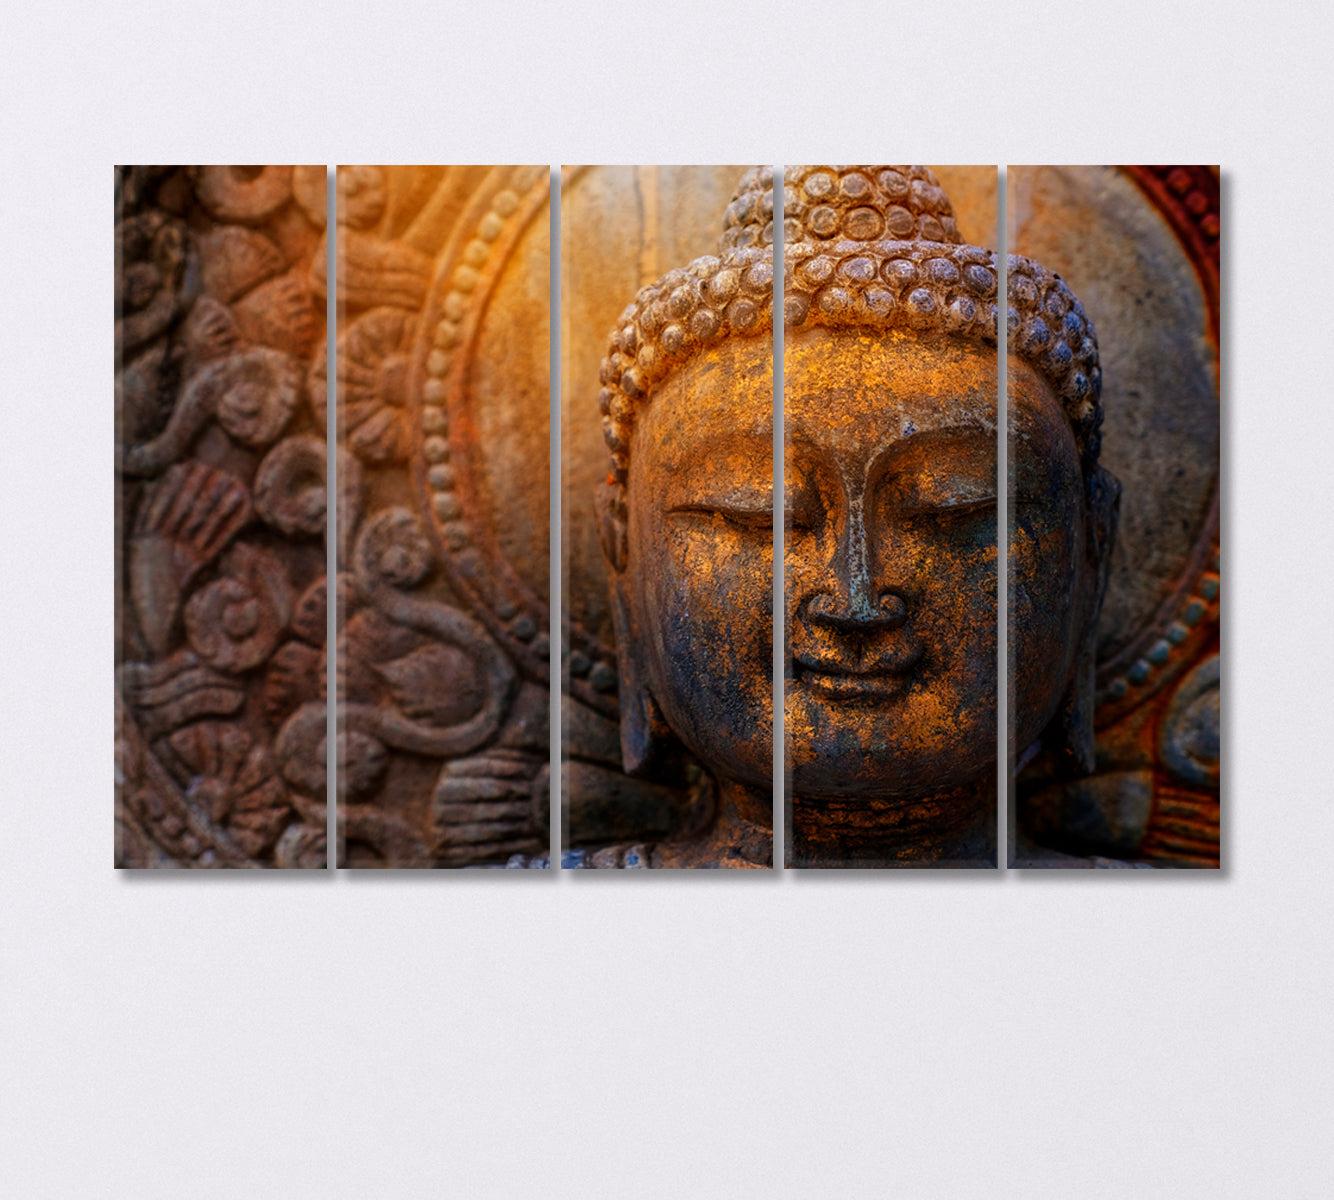 Bronze Buddha Statue Canvas Print-Canvas Print-CetArt-5 Panels-36x24 inches-CetArt